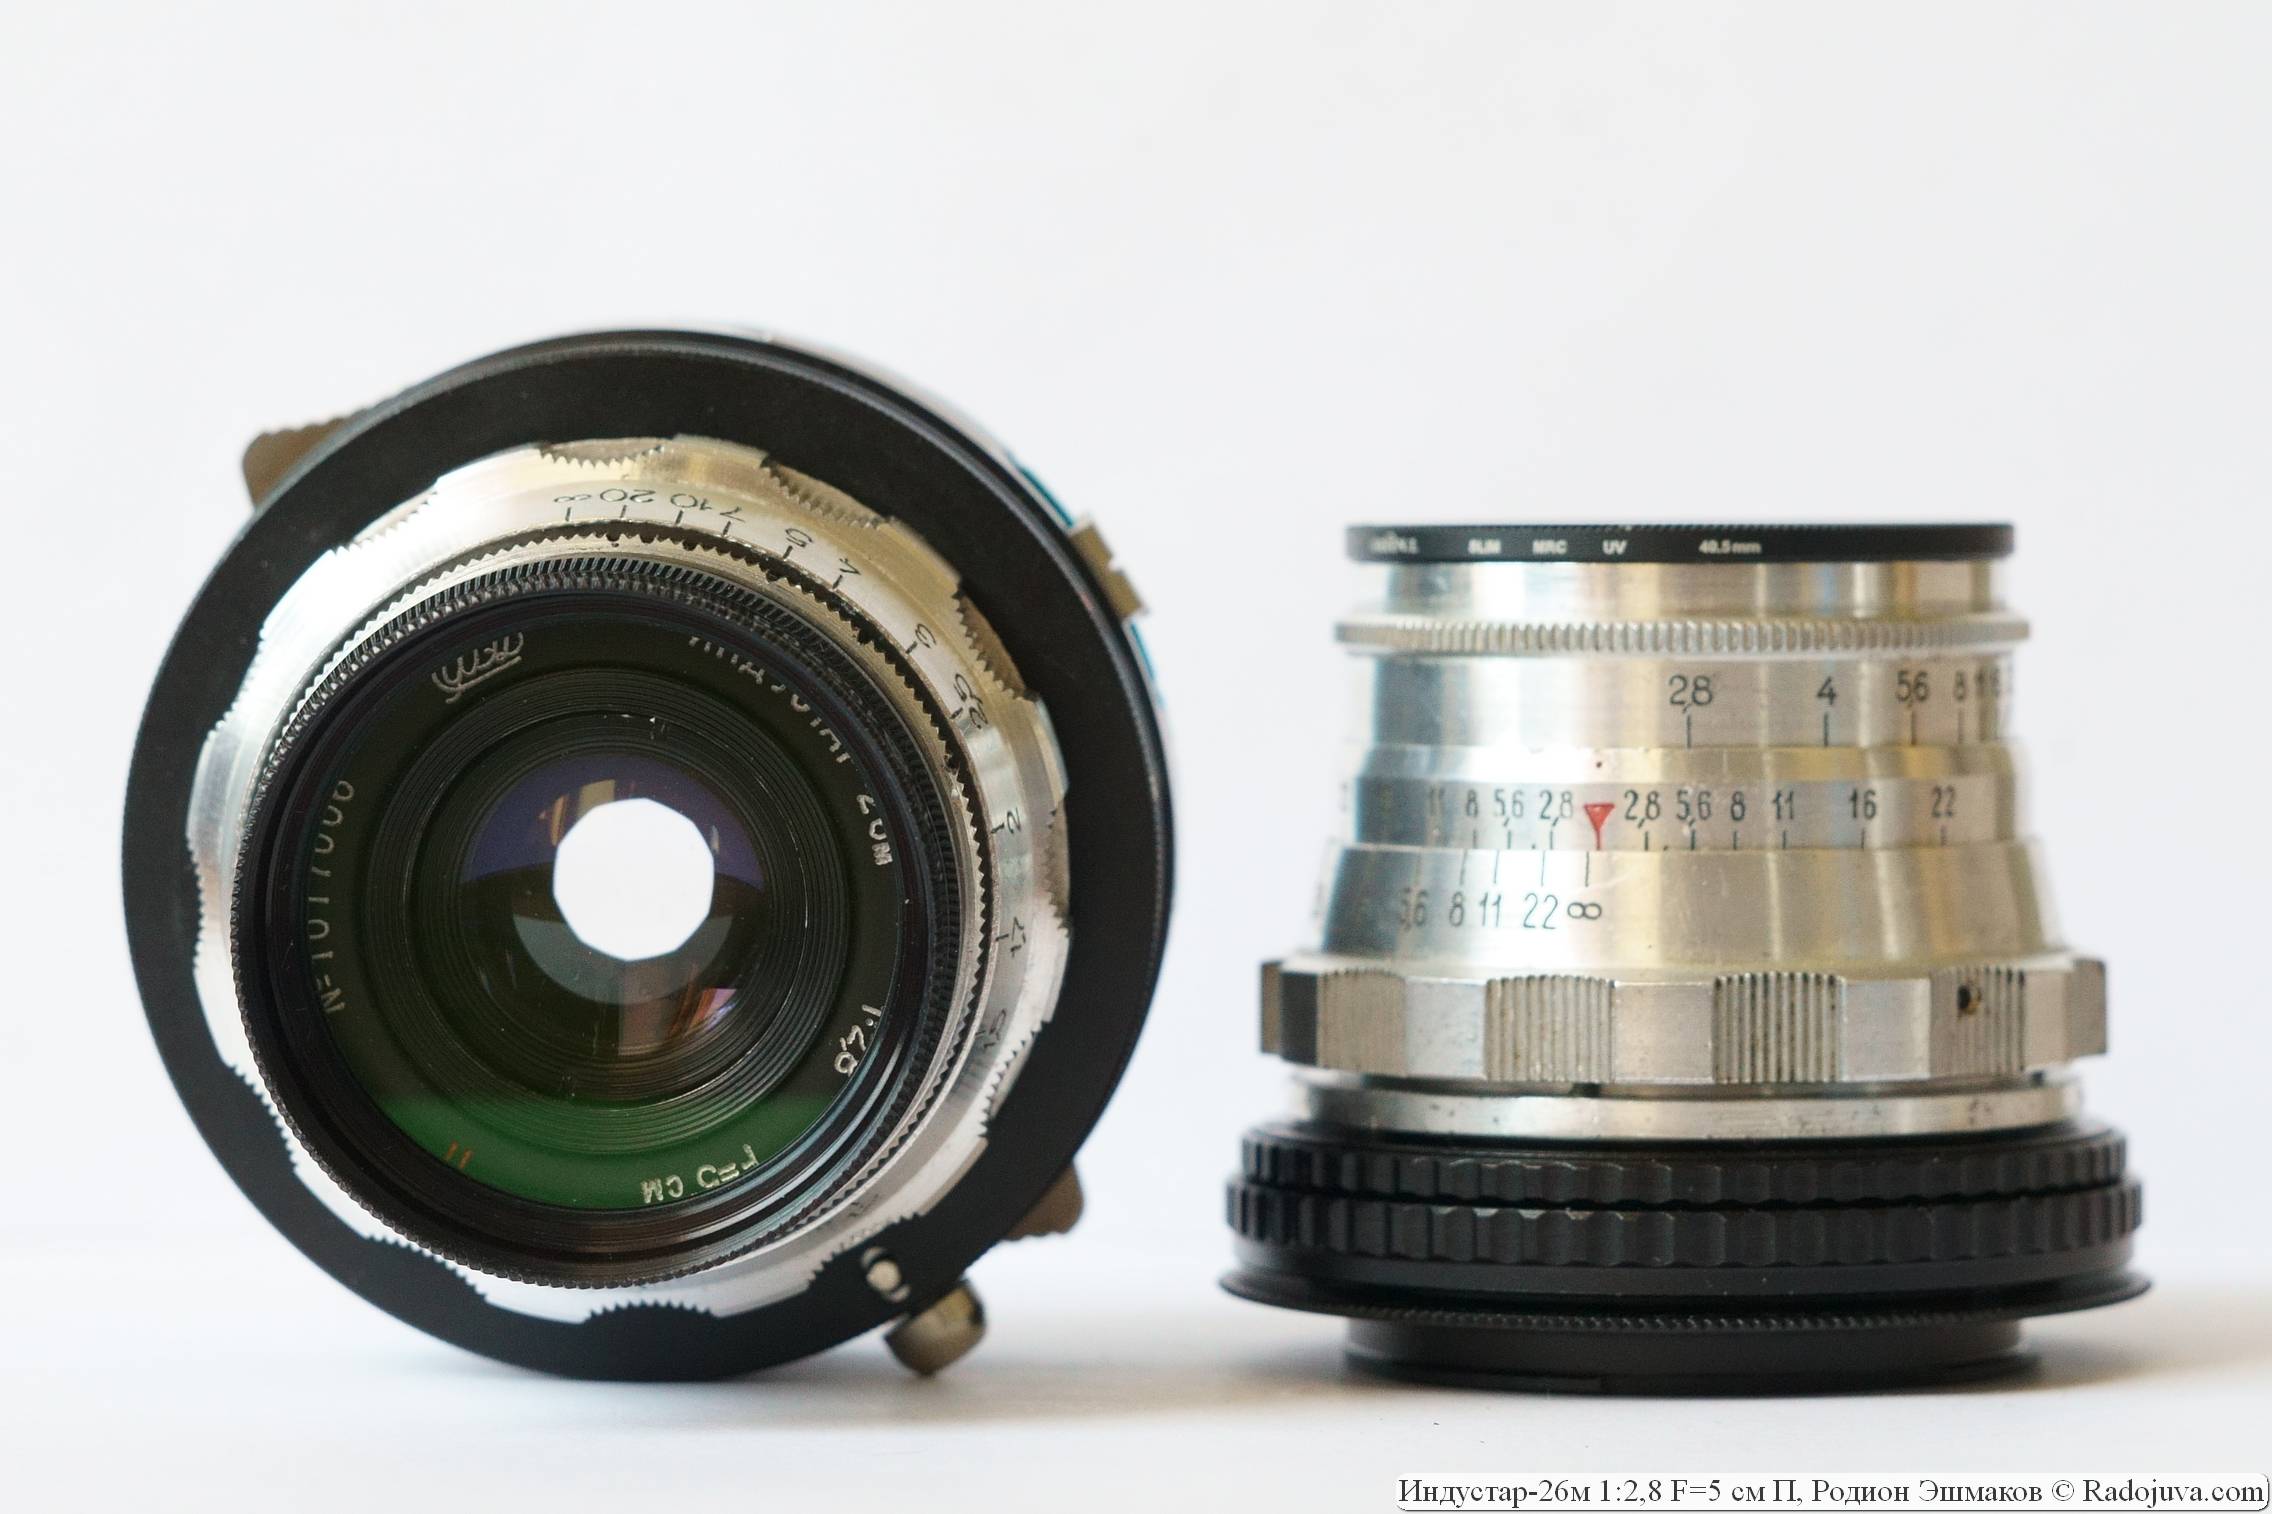 10 aperture blades provide a circular pupil at any aperture.